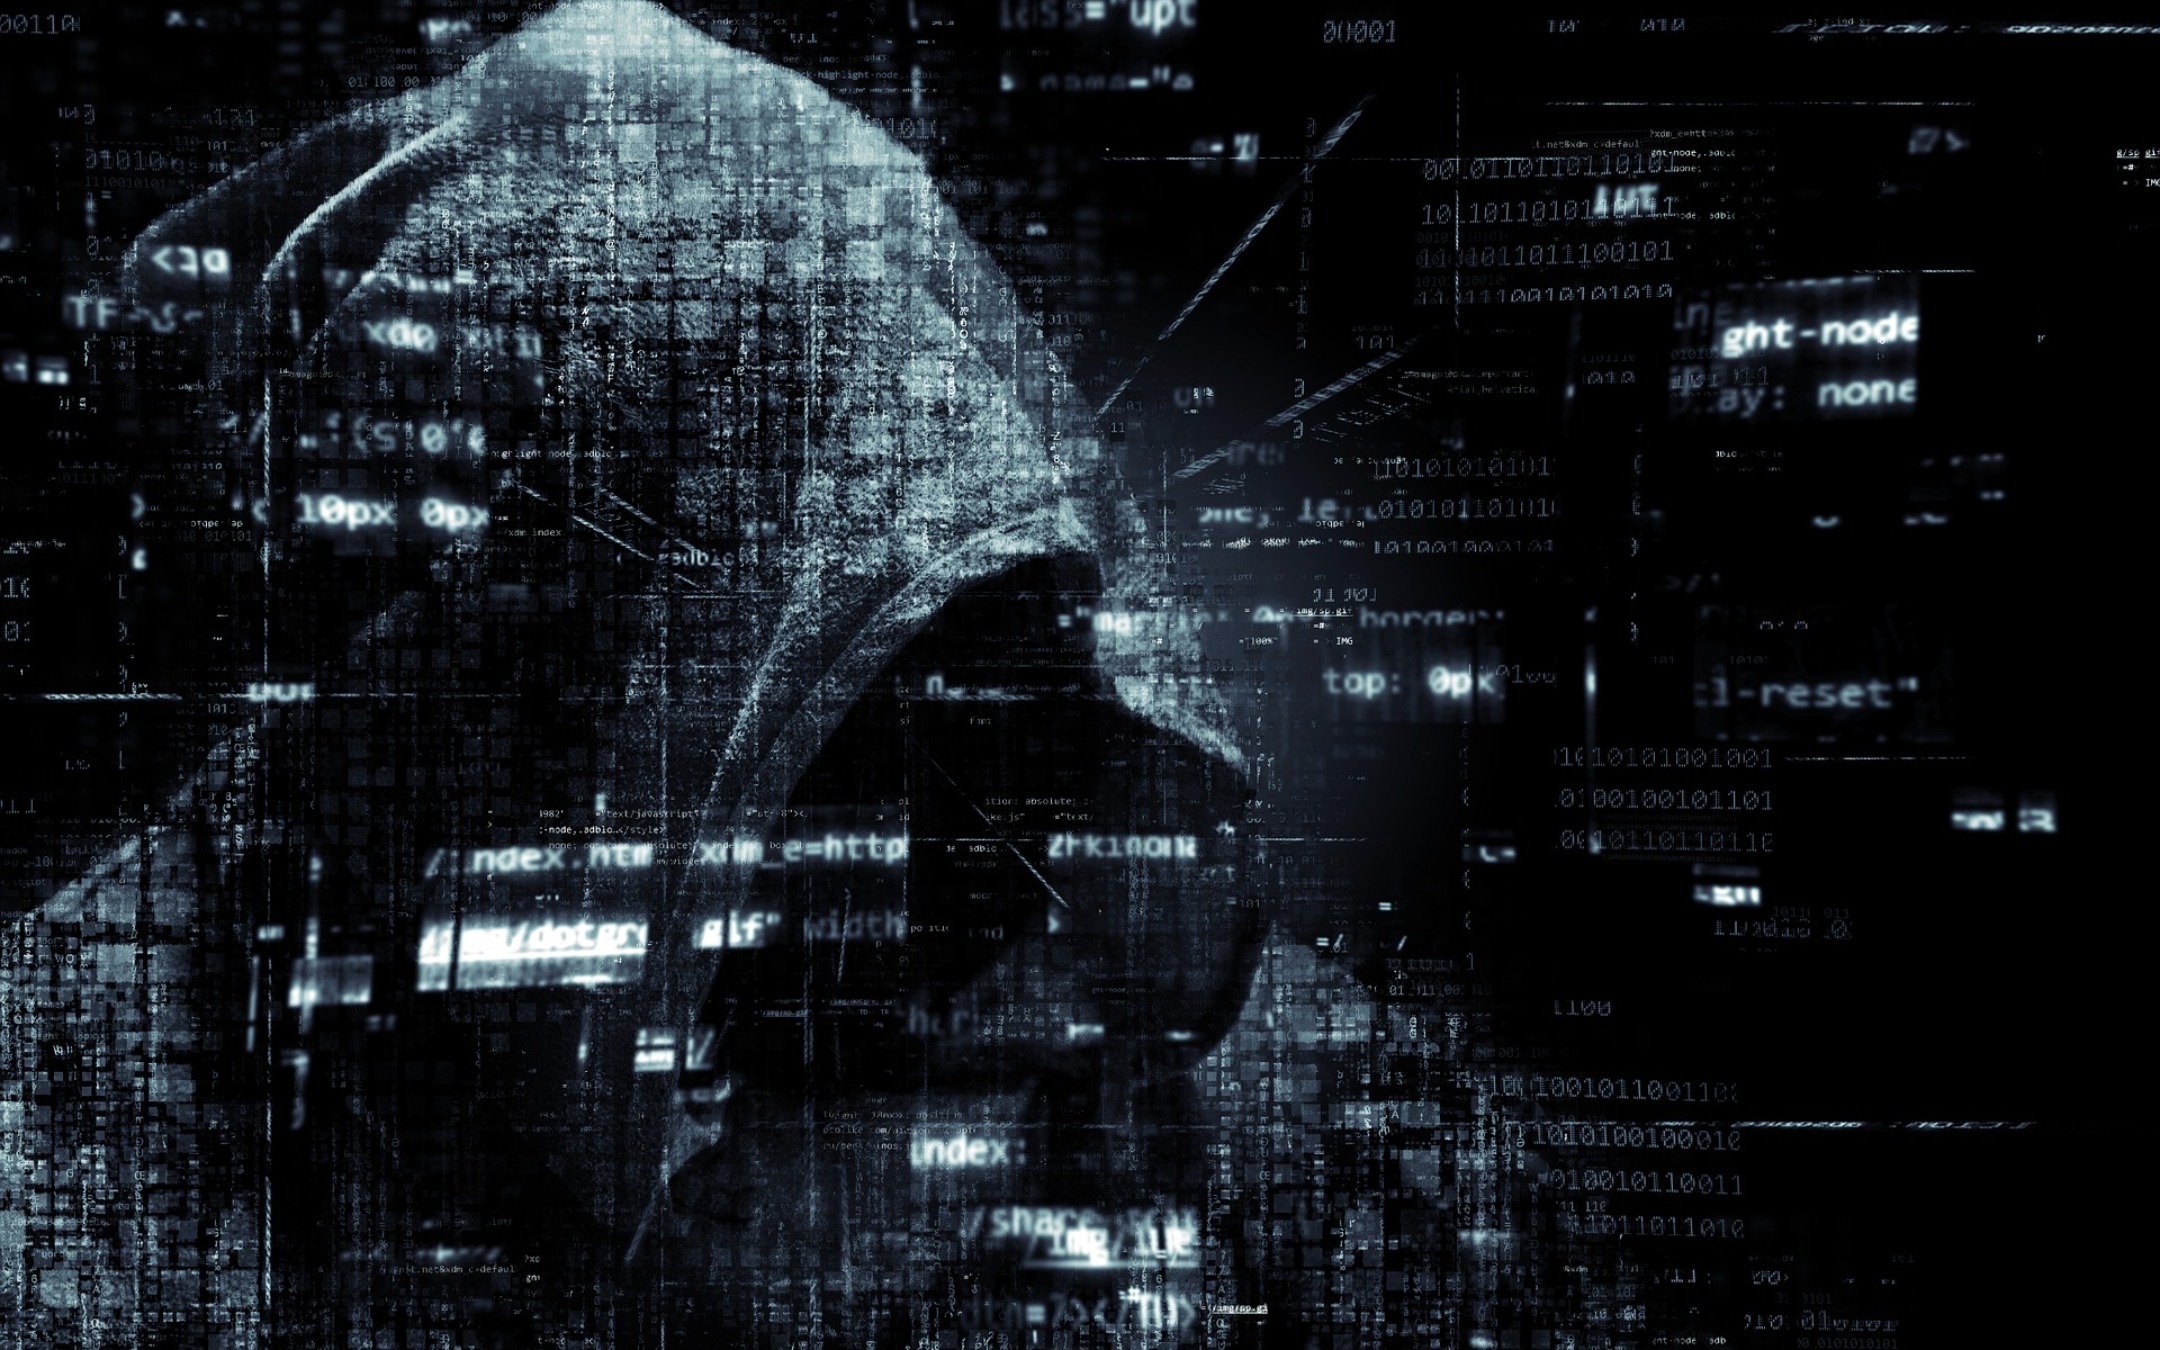 Ethereum creator Vitalik Buterin hacked: what happened?